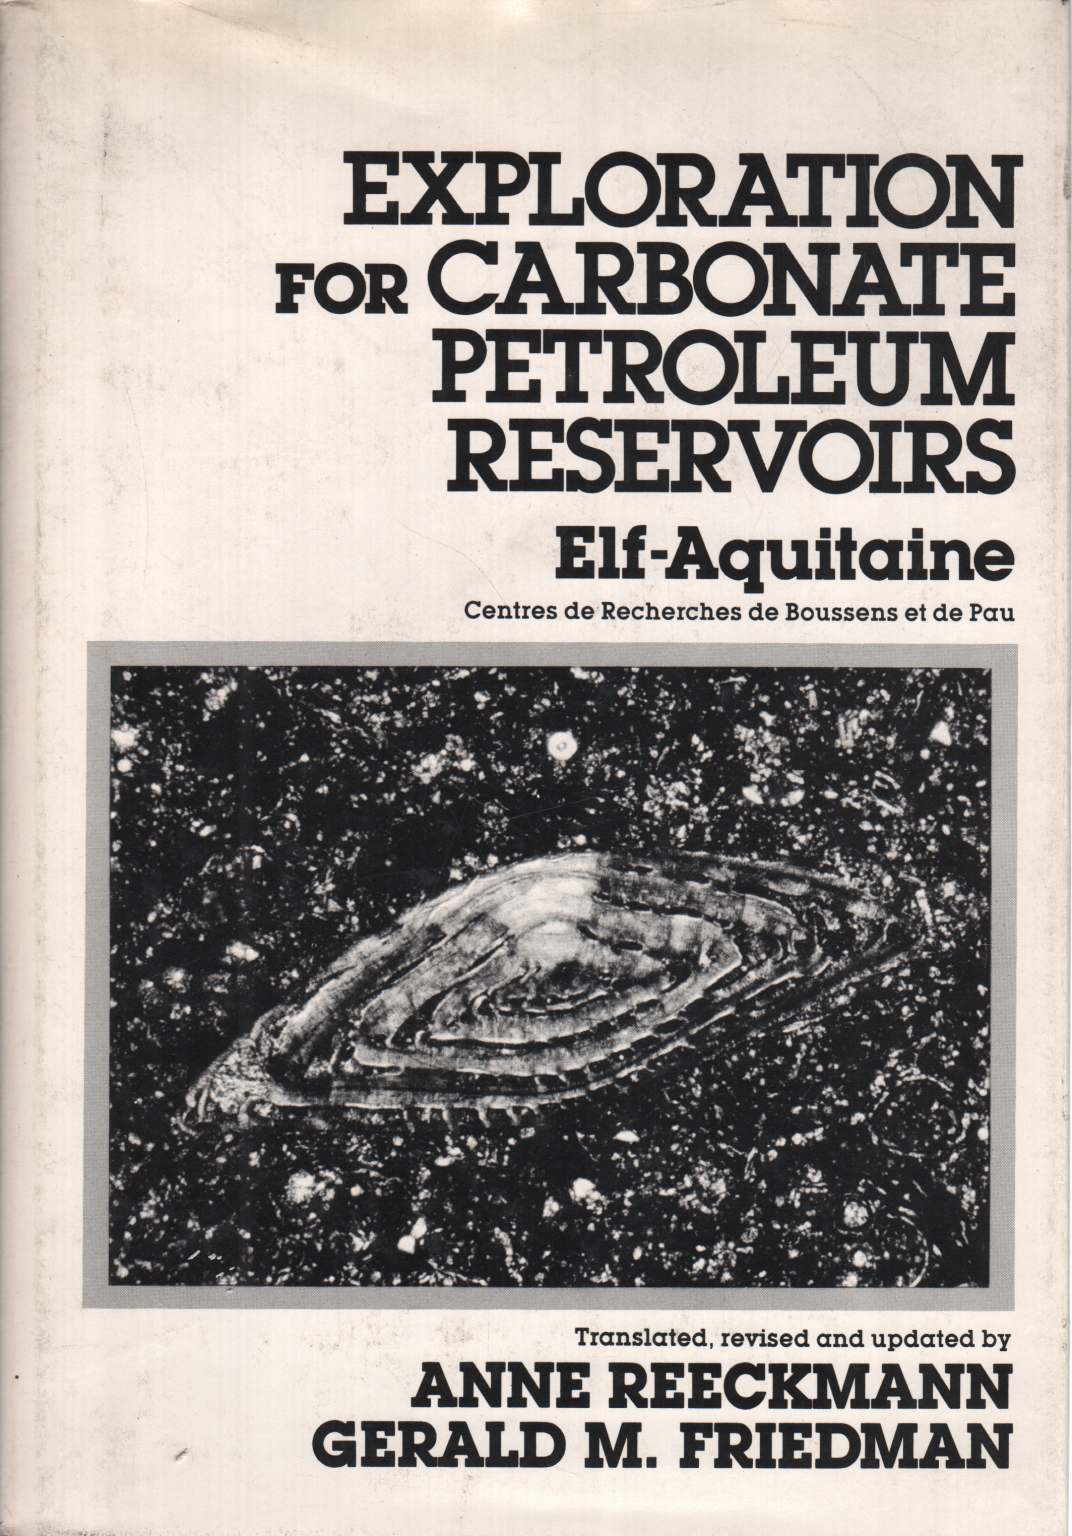 Exploration for carbonate petroleum reservoirs, Anne Reeckmann Gerald M. Friedman